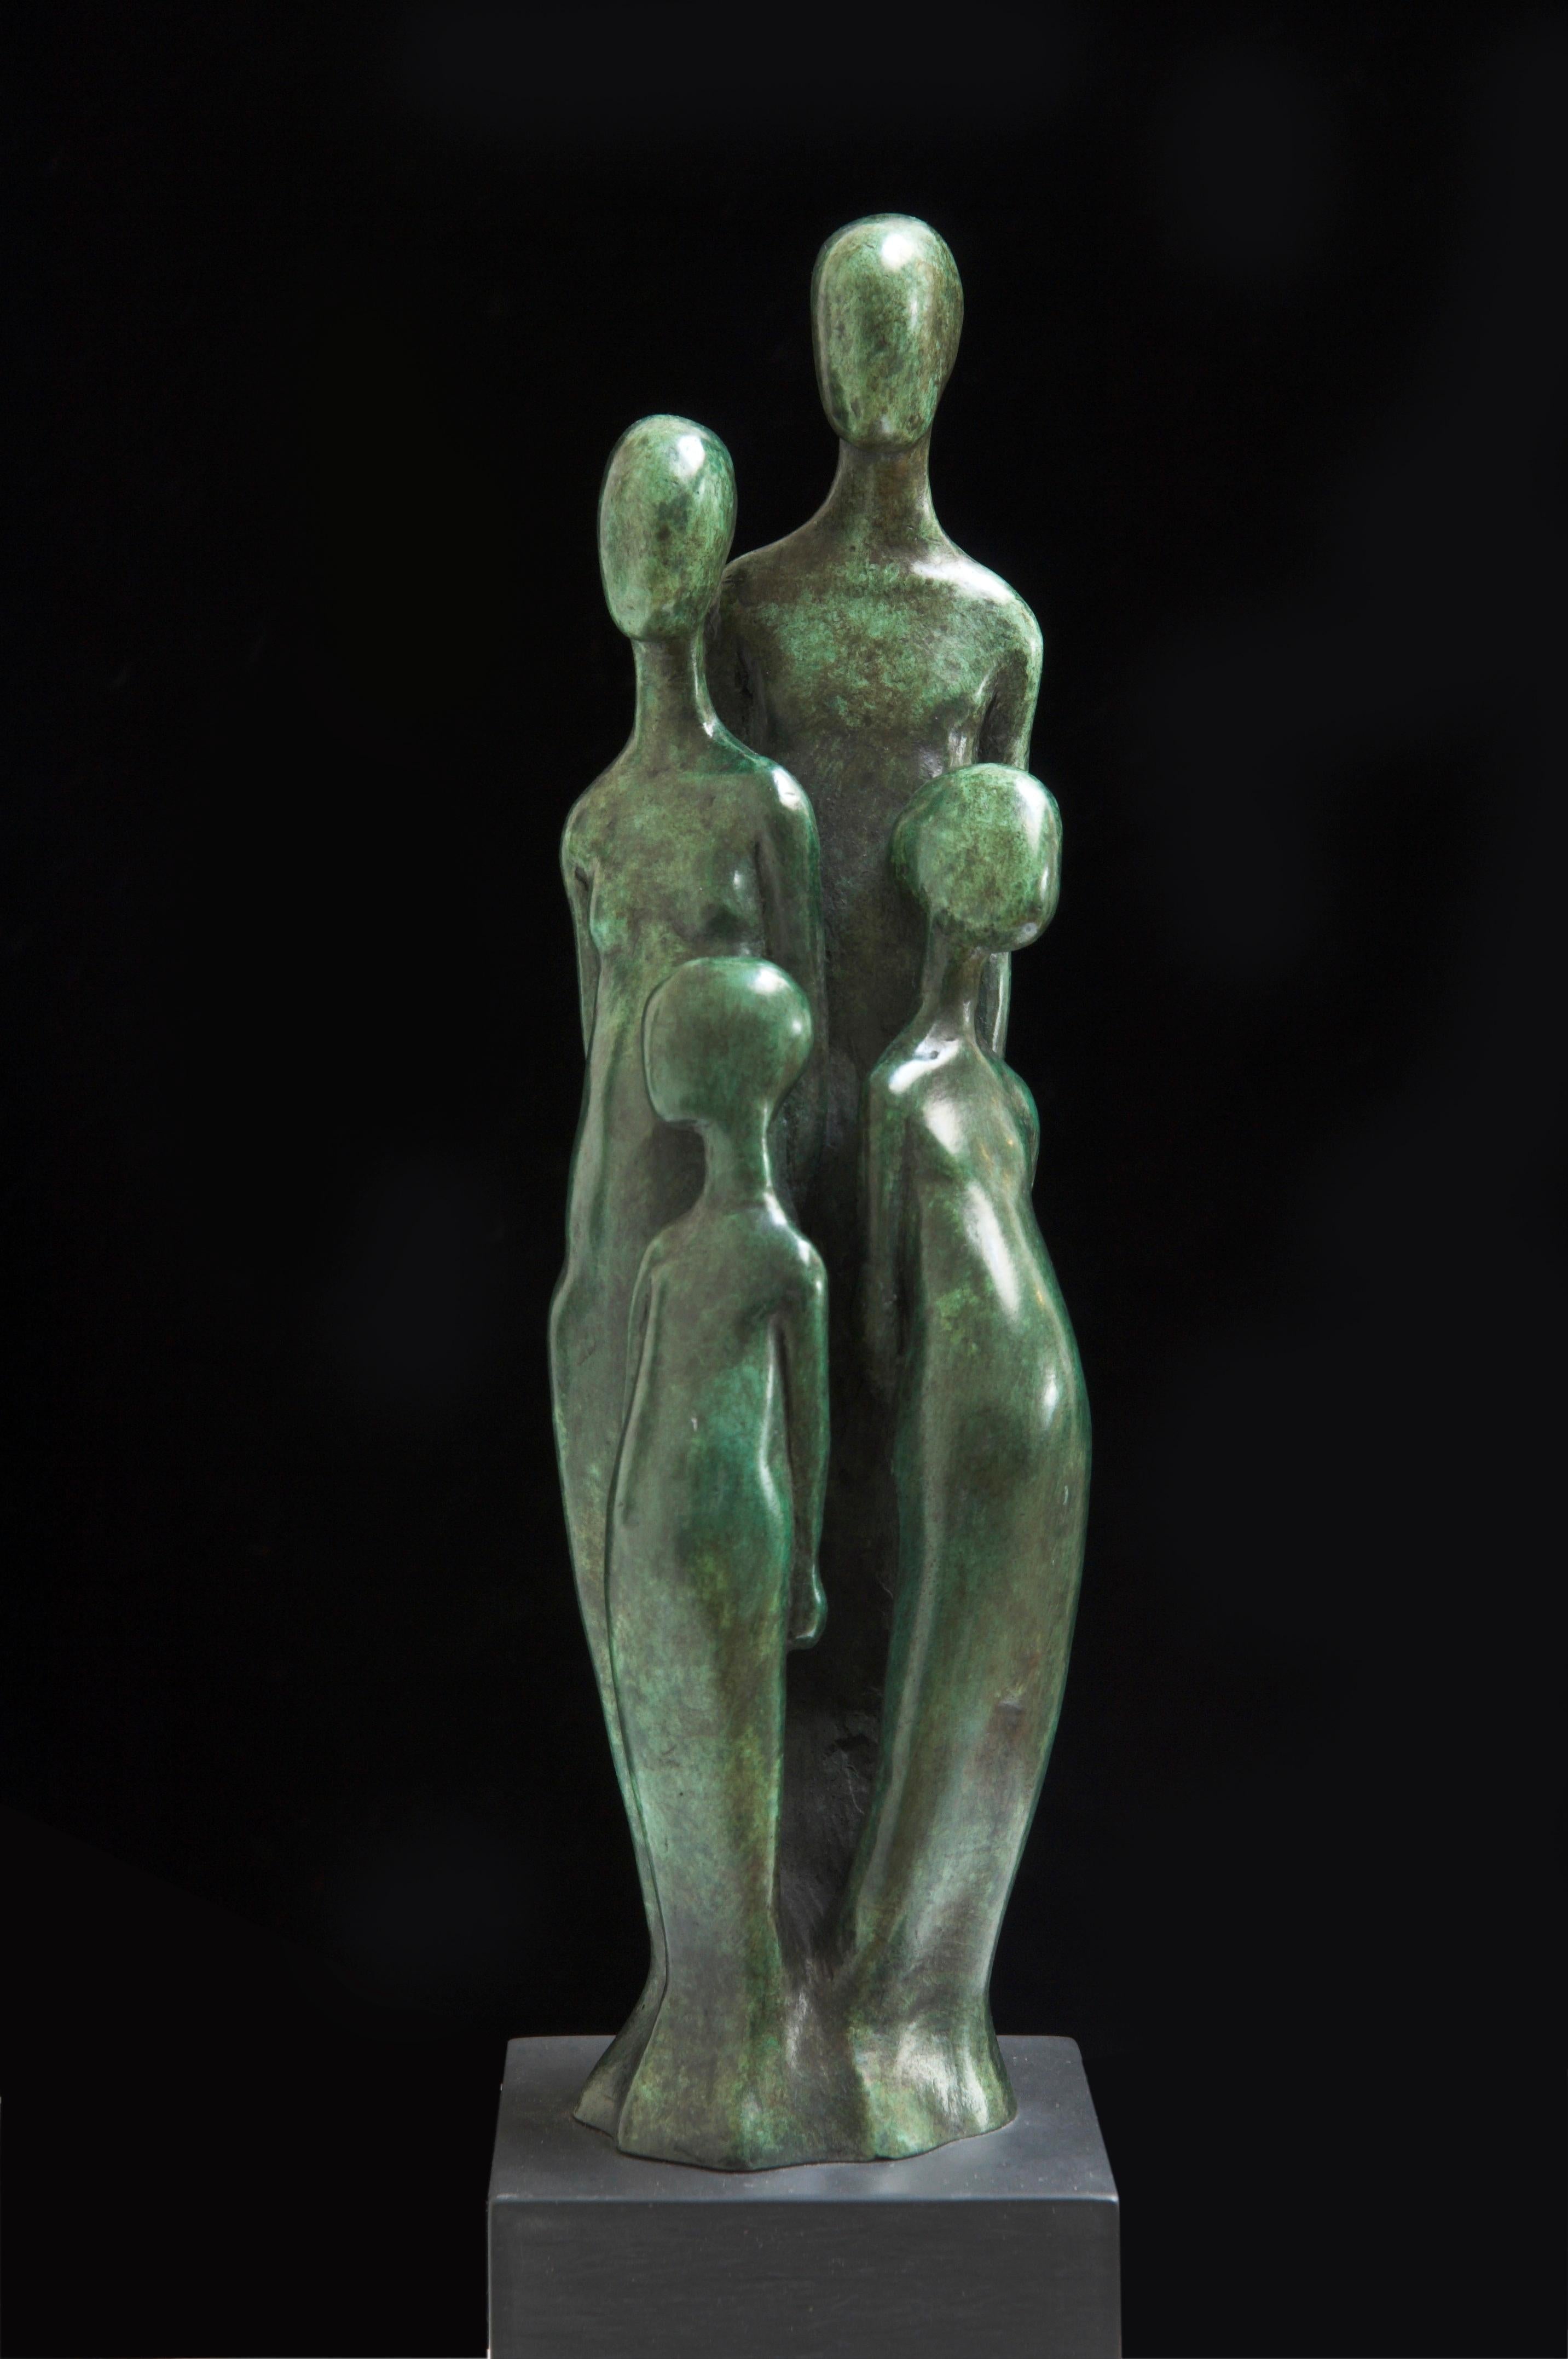 La Famille-original figurative bronze sculpture-artwork for sale-contemporary 